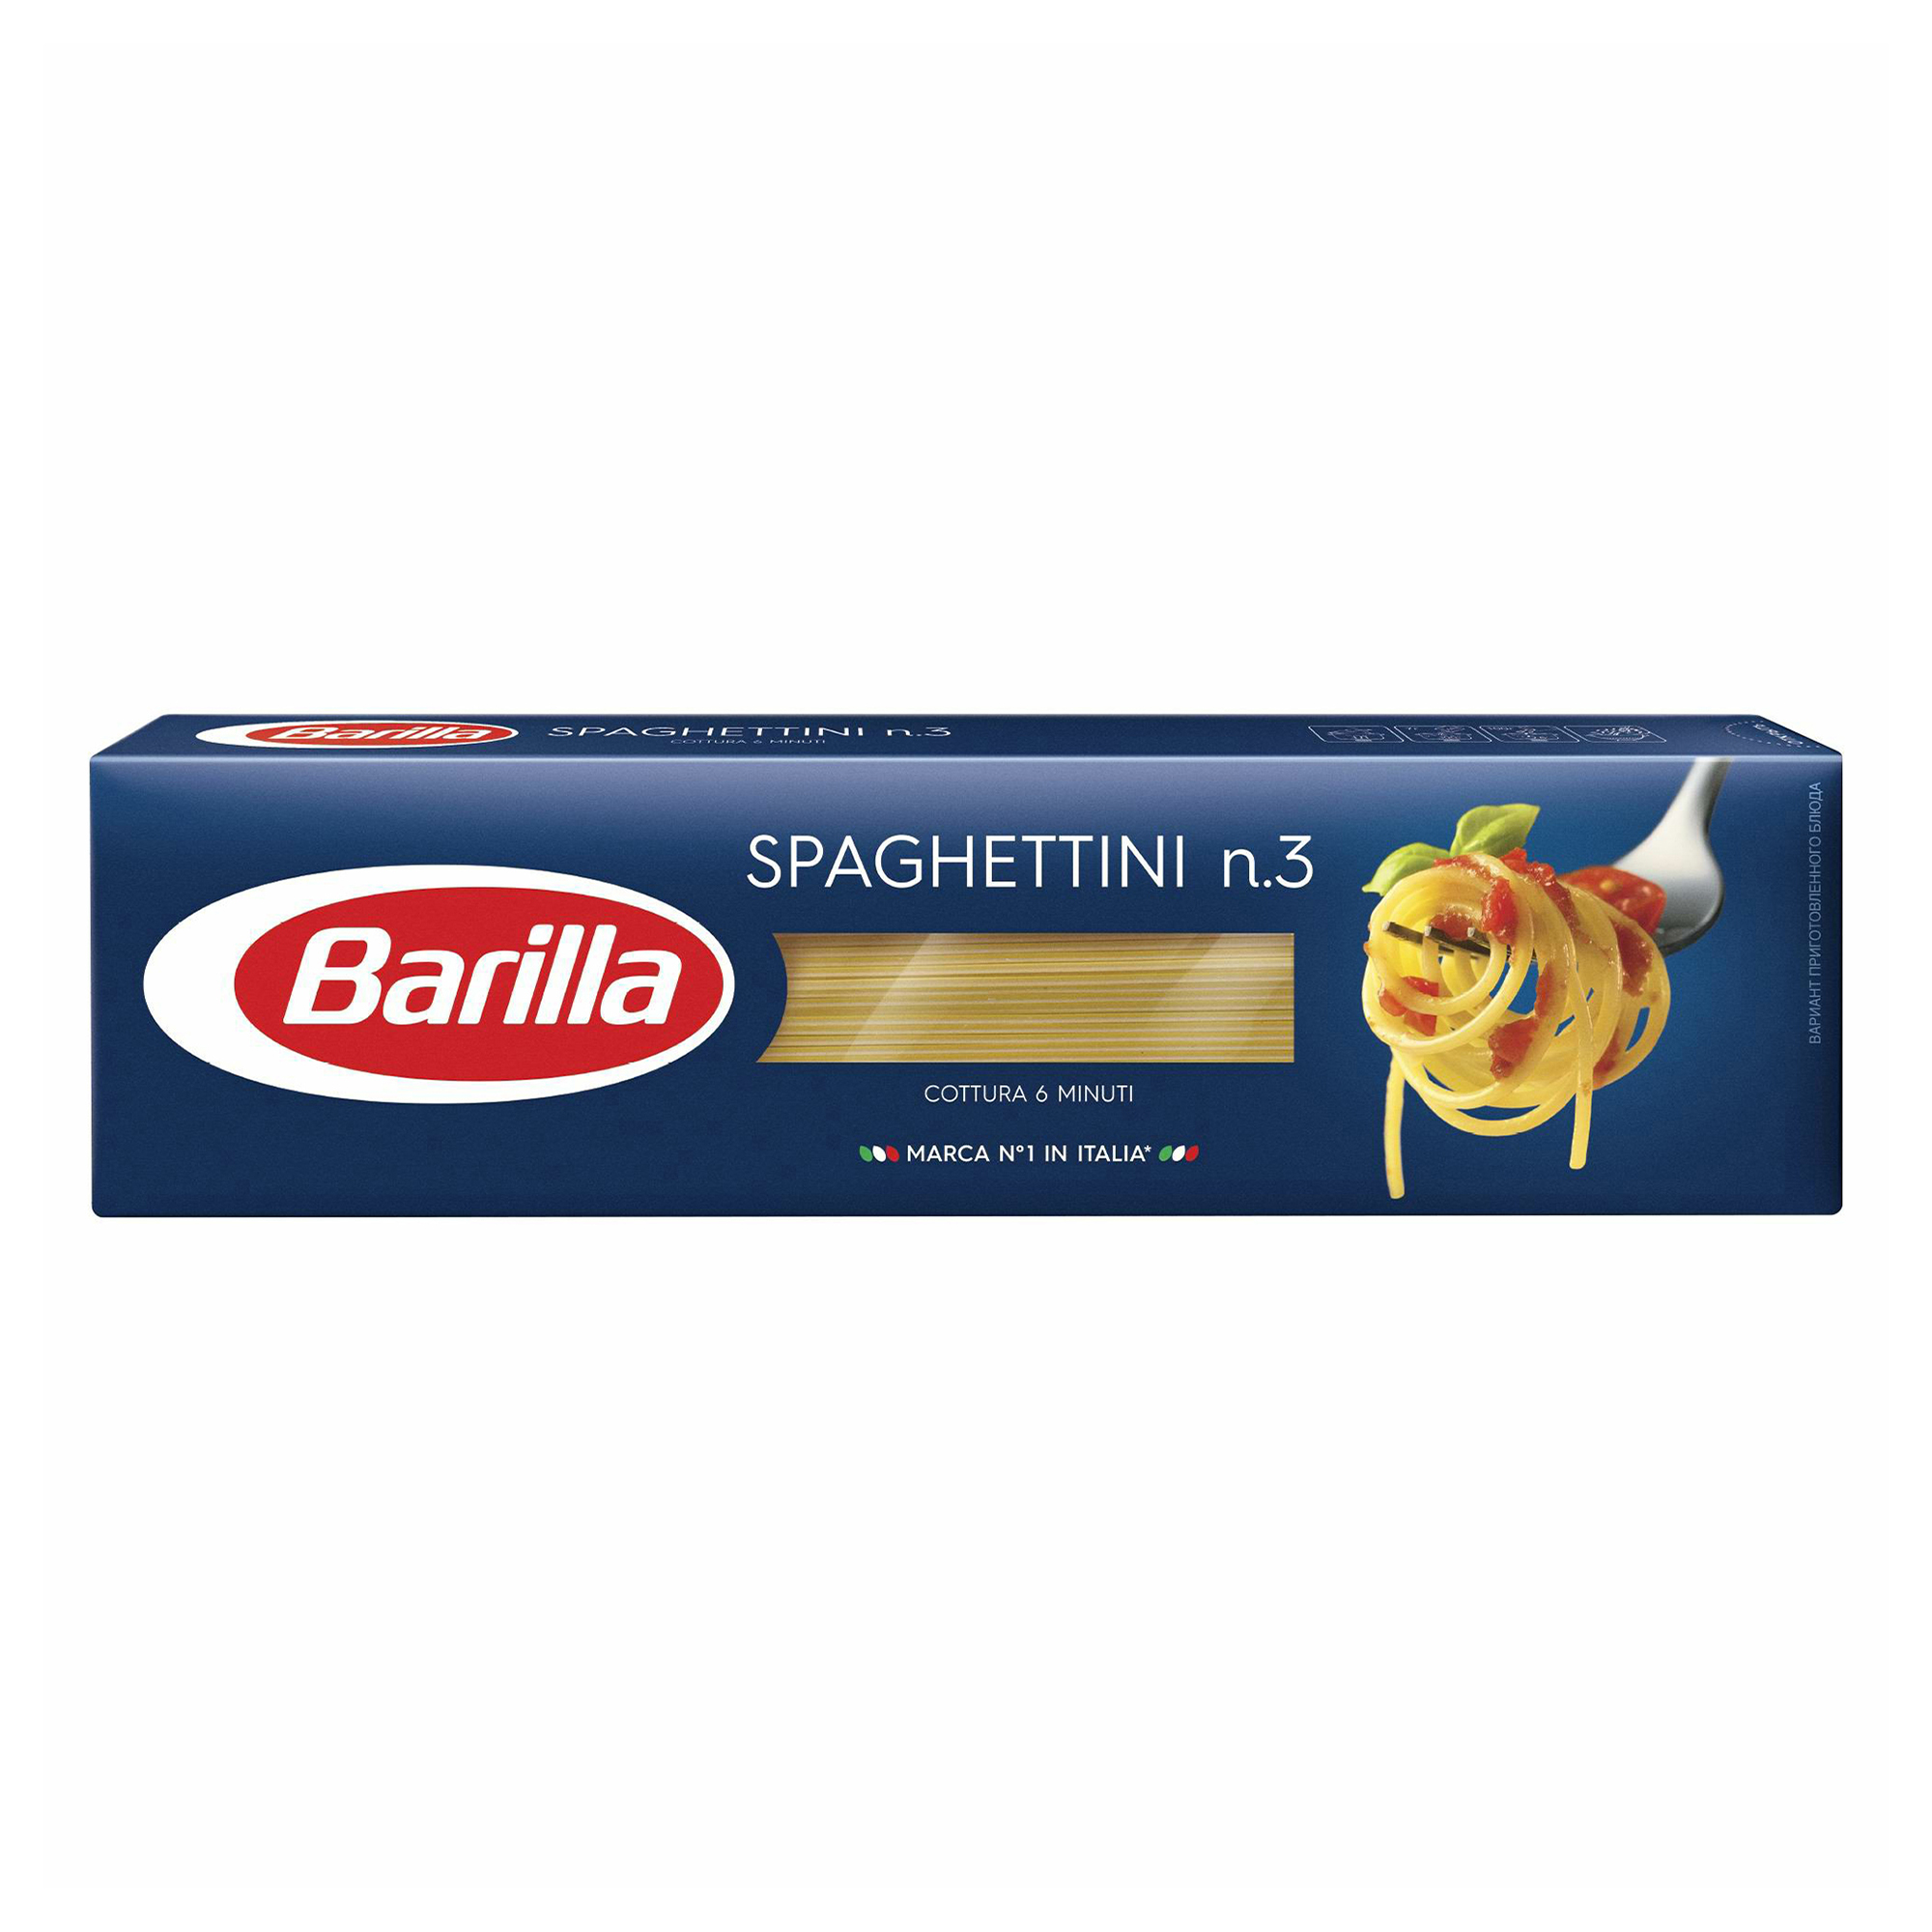 фото Макаронные изделия barilla spaghettini № 3 спагетти 450 г